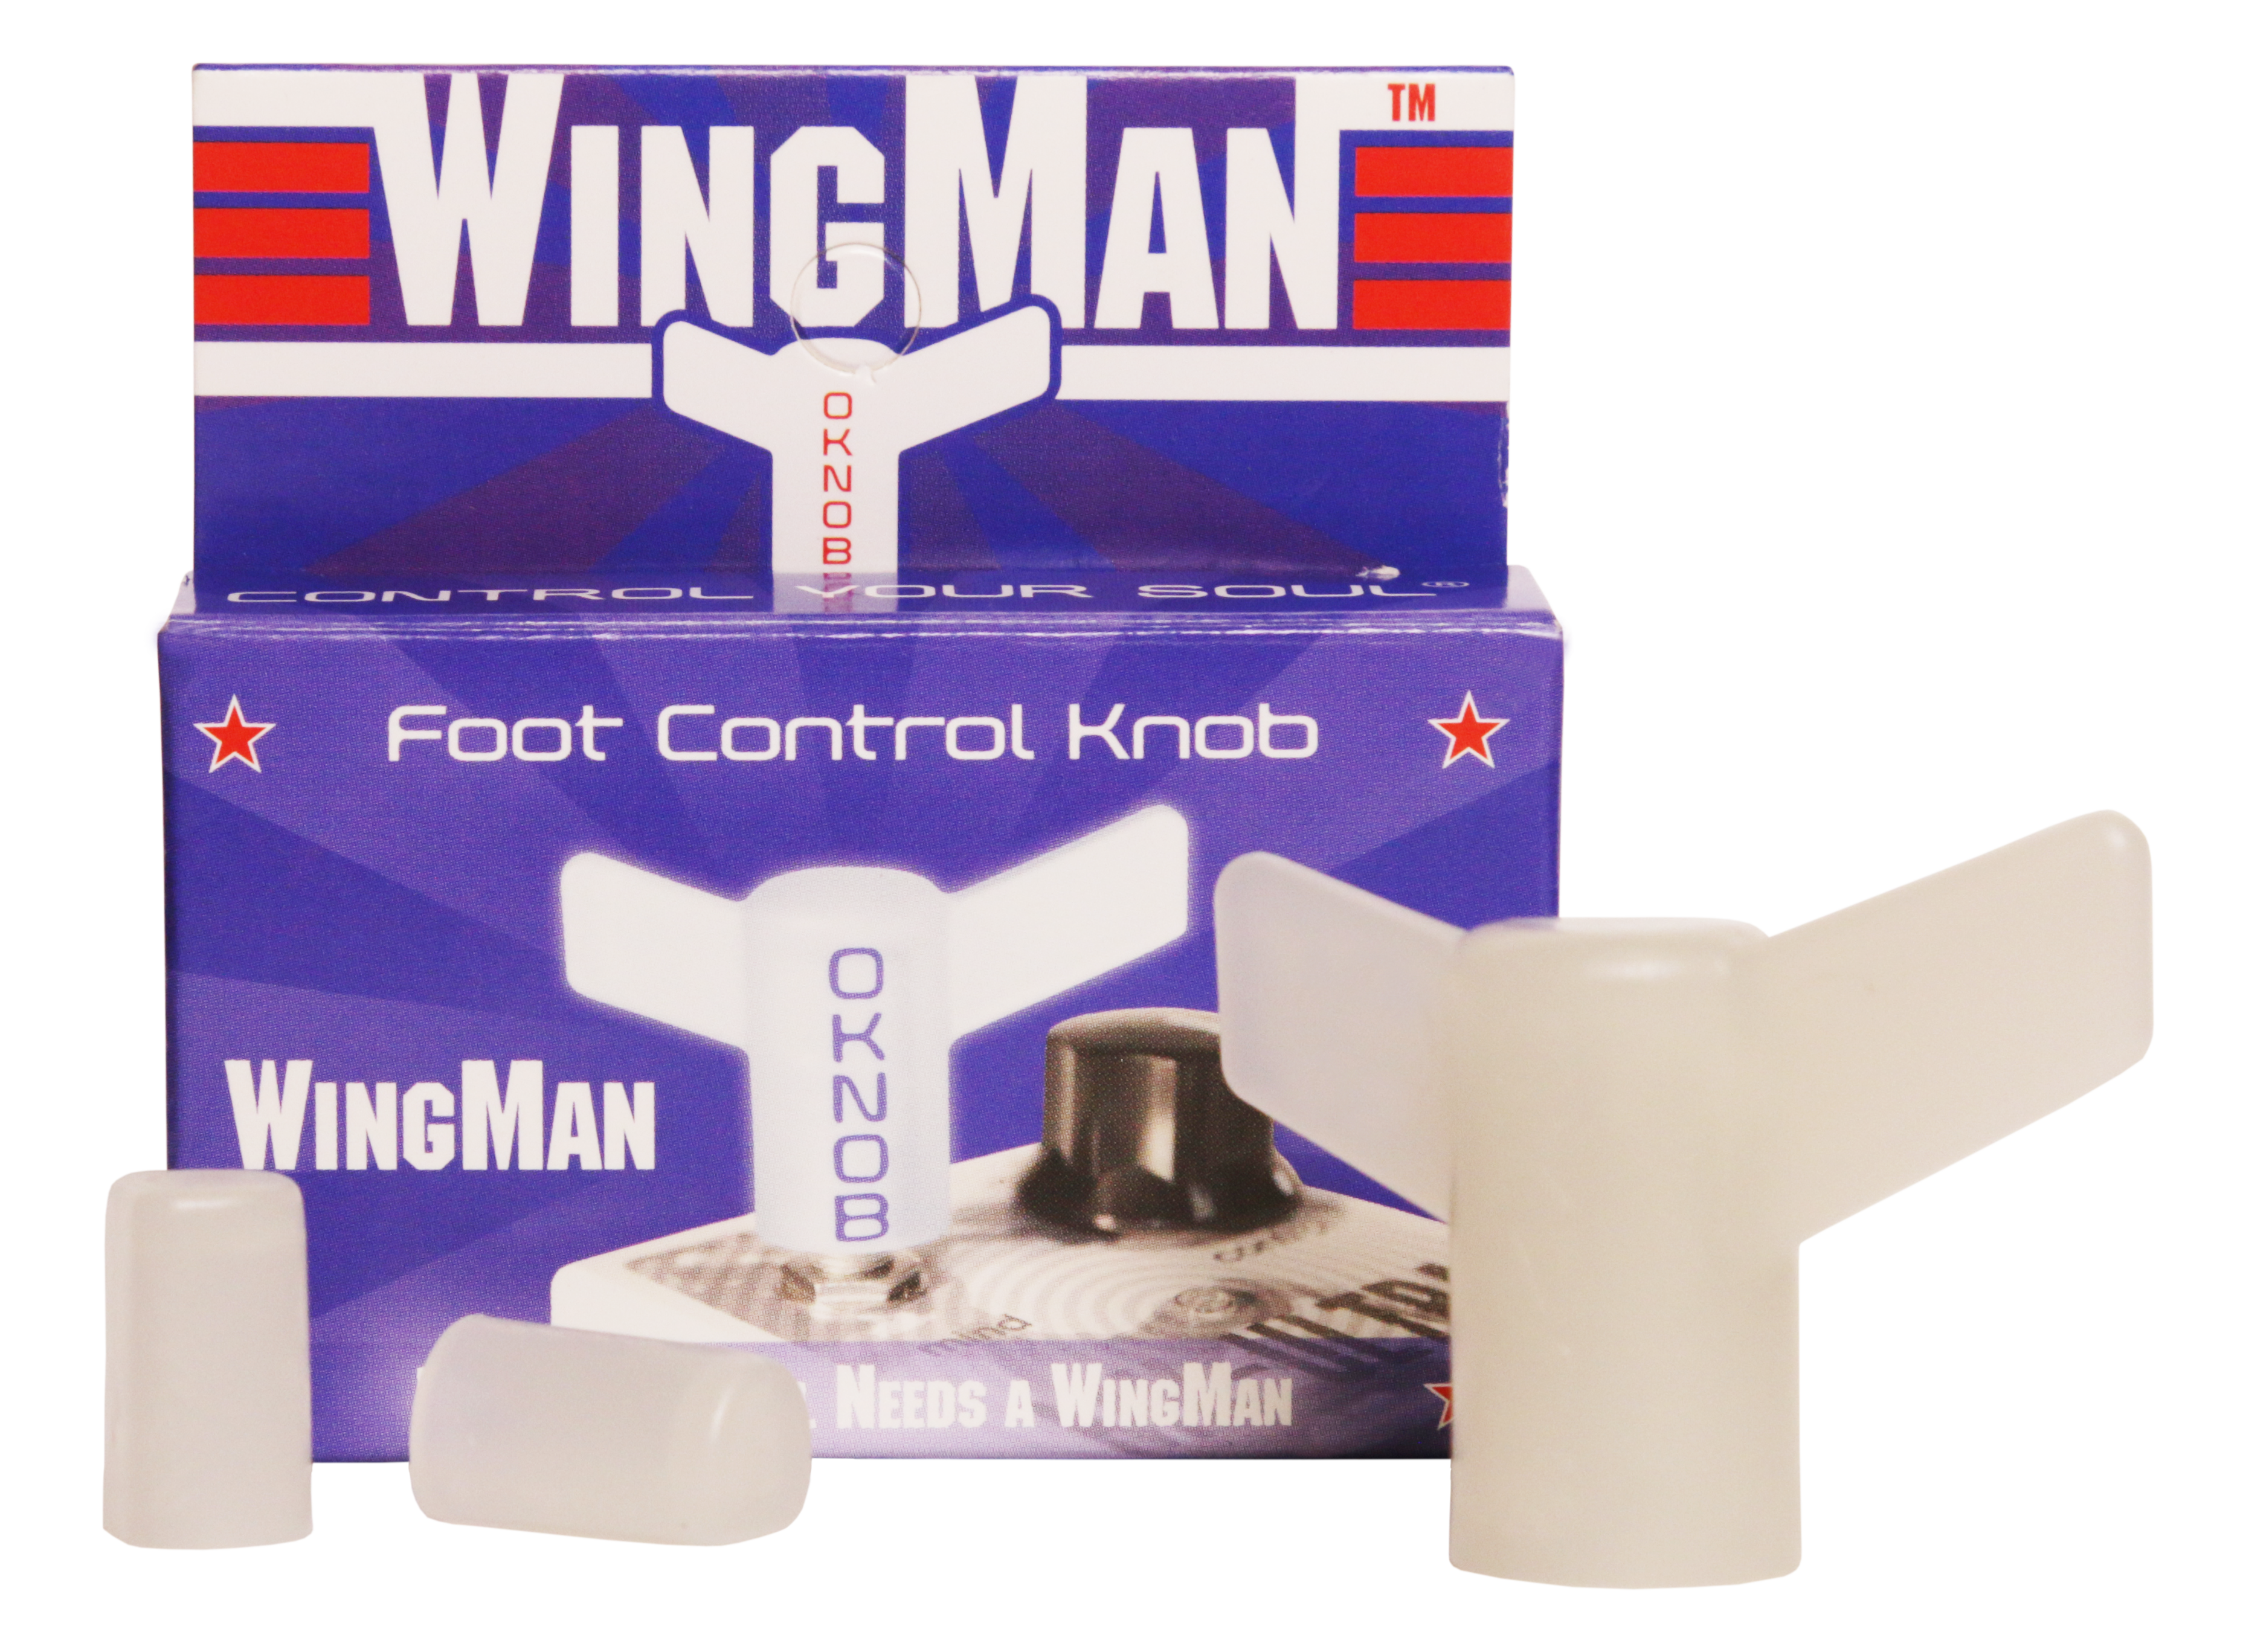 Foot Control Knob from Wingman FX